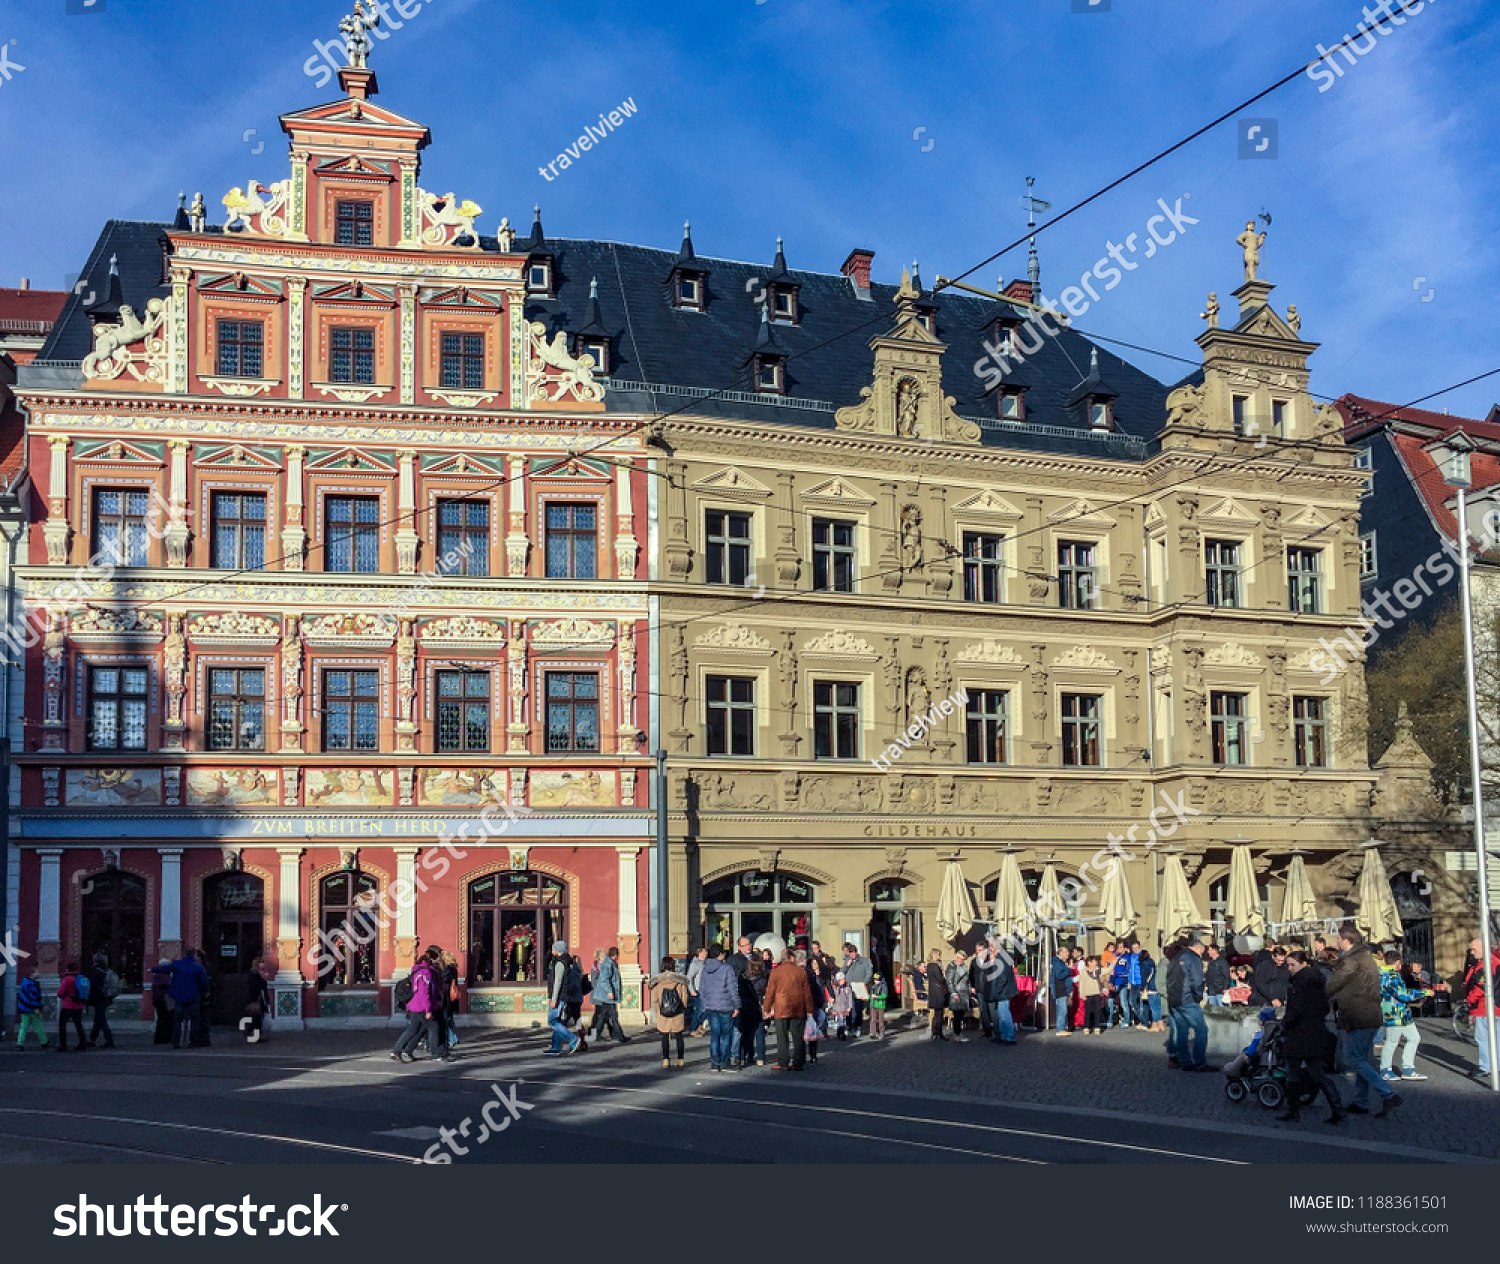 Erfurt Germany Dec 20 2015 People Stock Photo Edit Now 1188361501